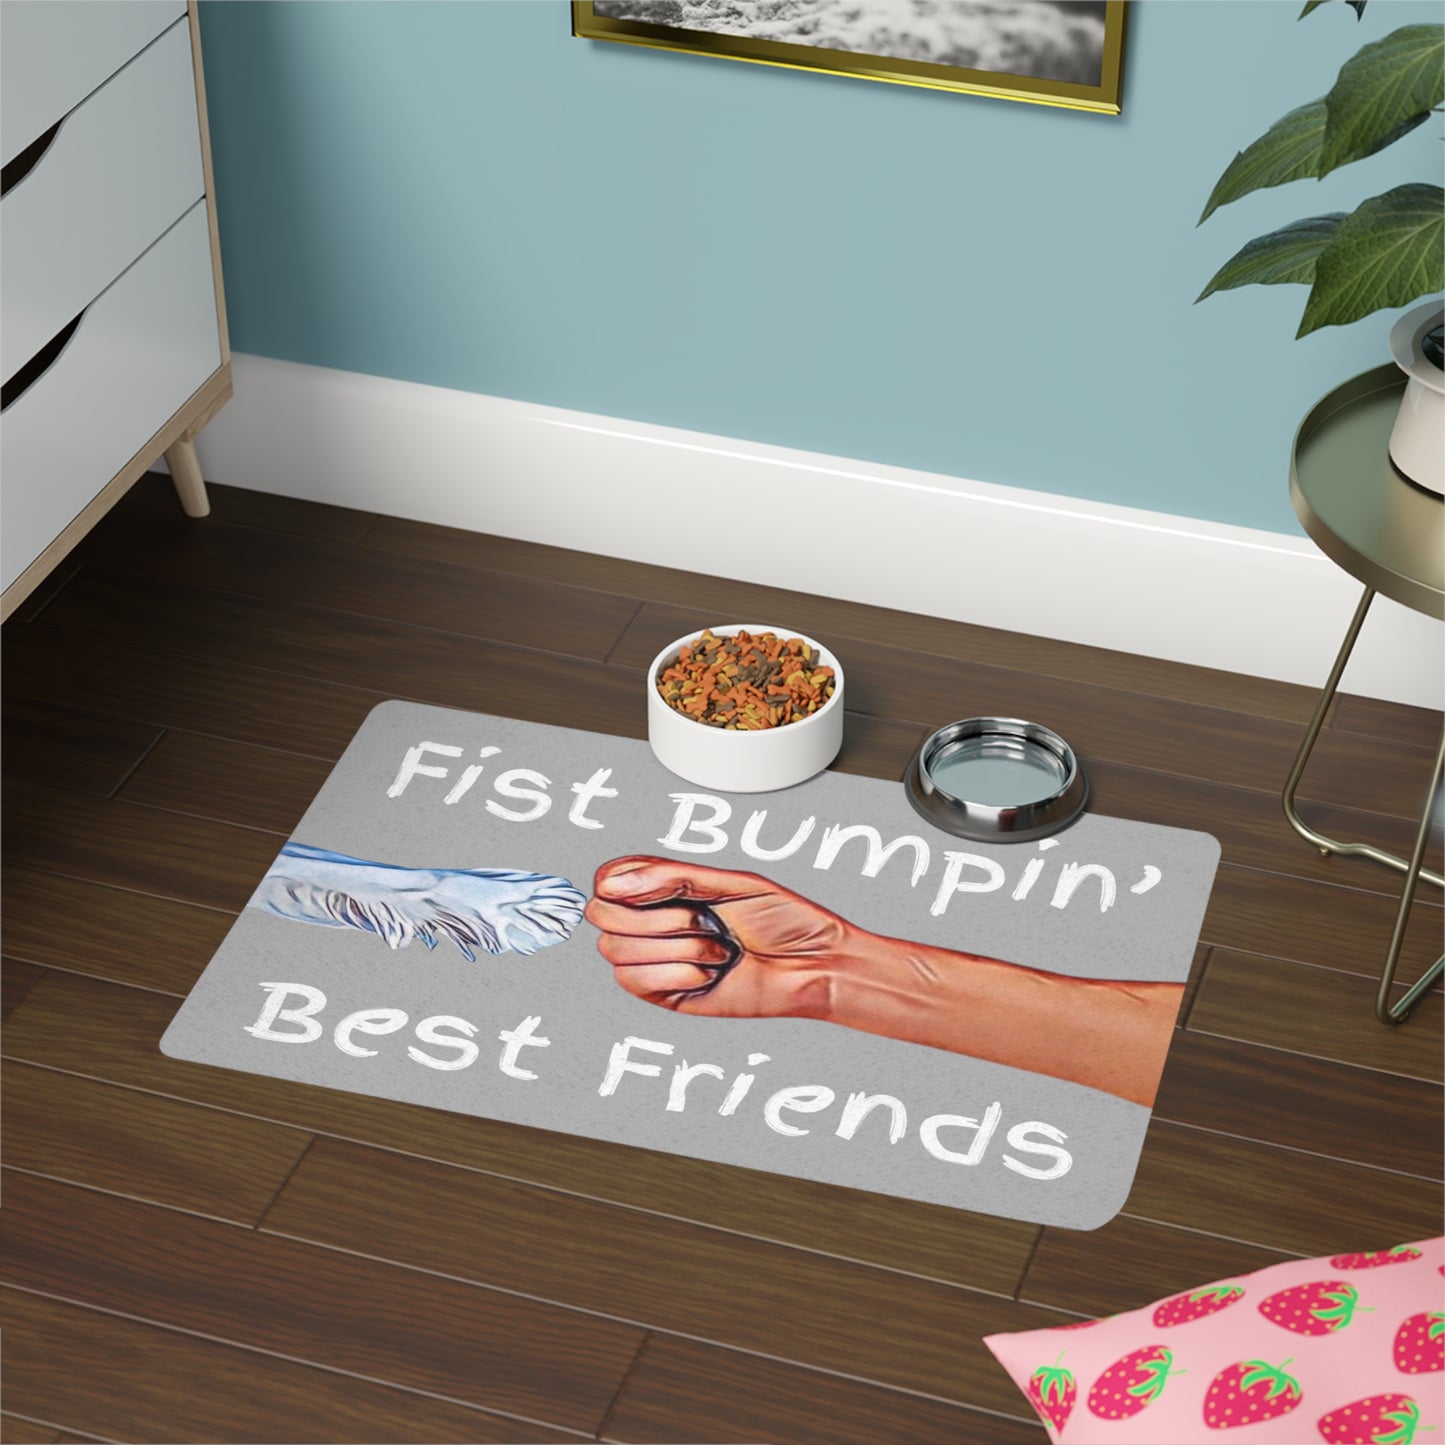 Opie’s Cavalier Paw Fist Bumpin’ Best Friends Pet Food Mat (12x18)